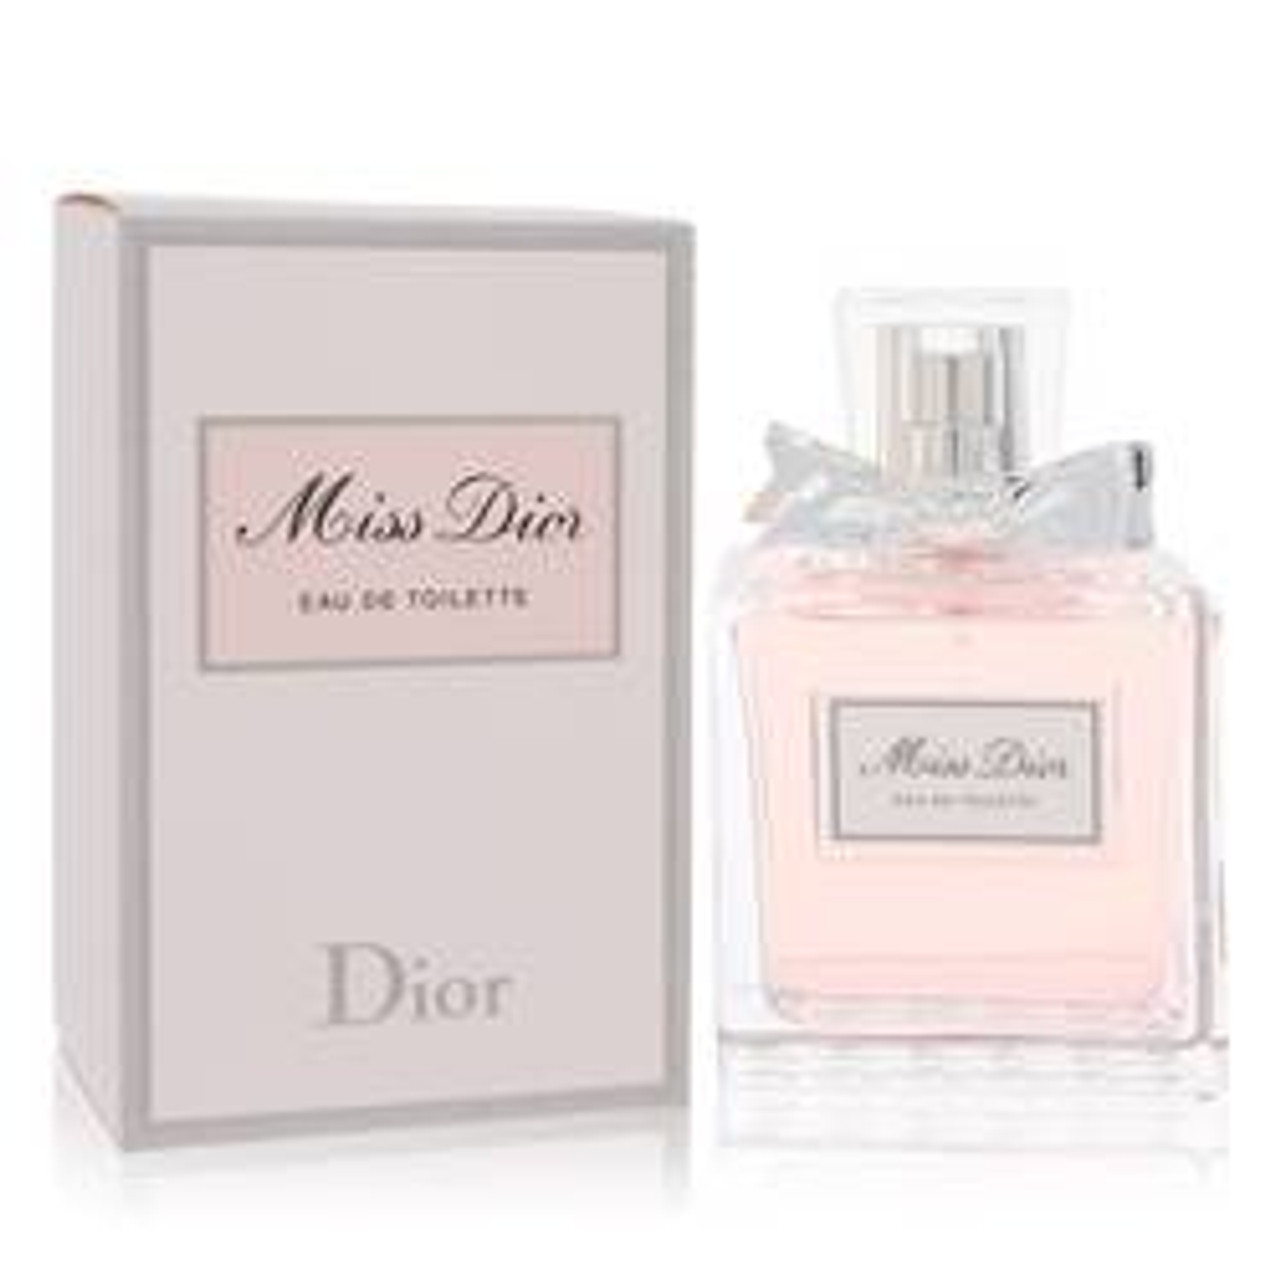 Miss Dior (miss Dior Cherie) Perfume By Christian Dior Eau De Toilette Spray (New Packaging) 3.4 oz for Women - *Pre-Order